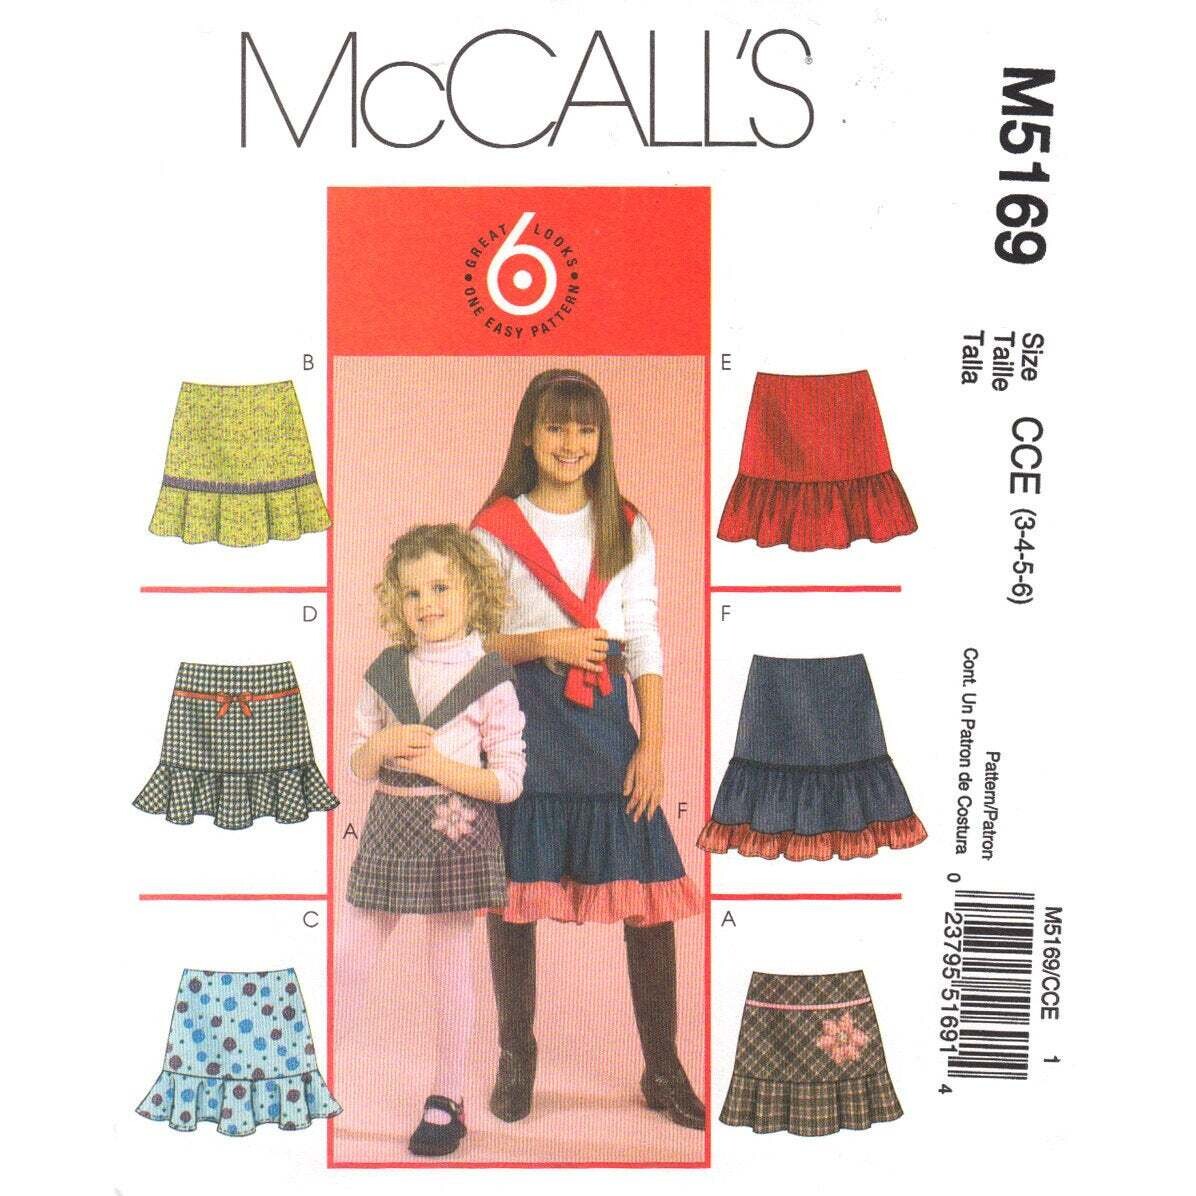 McCall's 5169 pattern